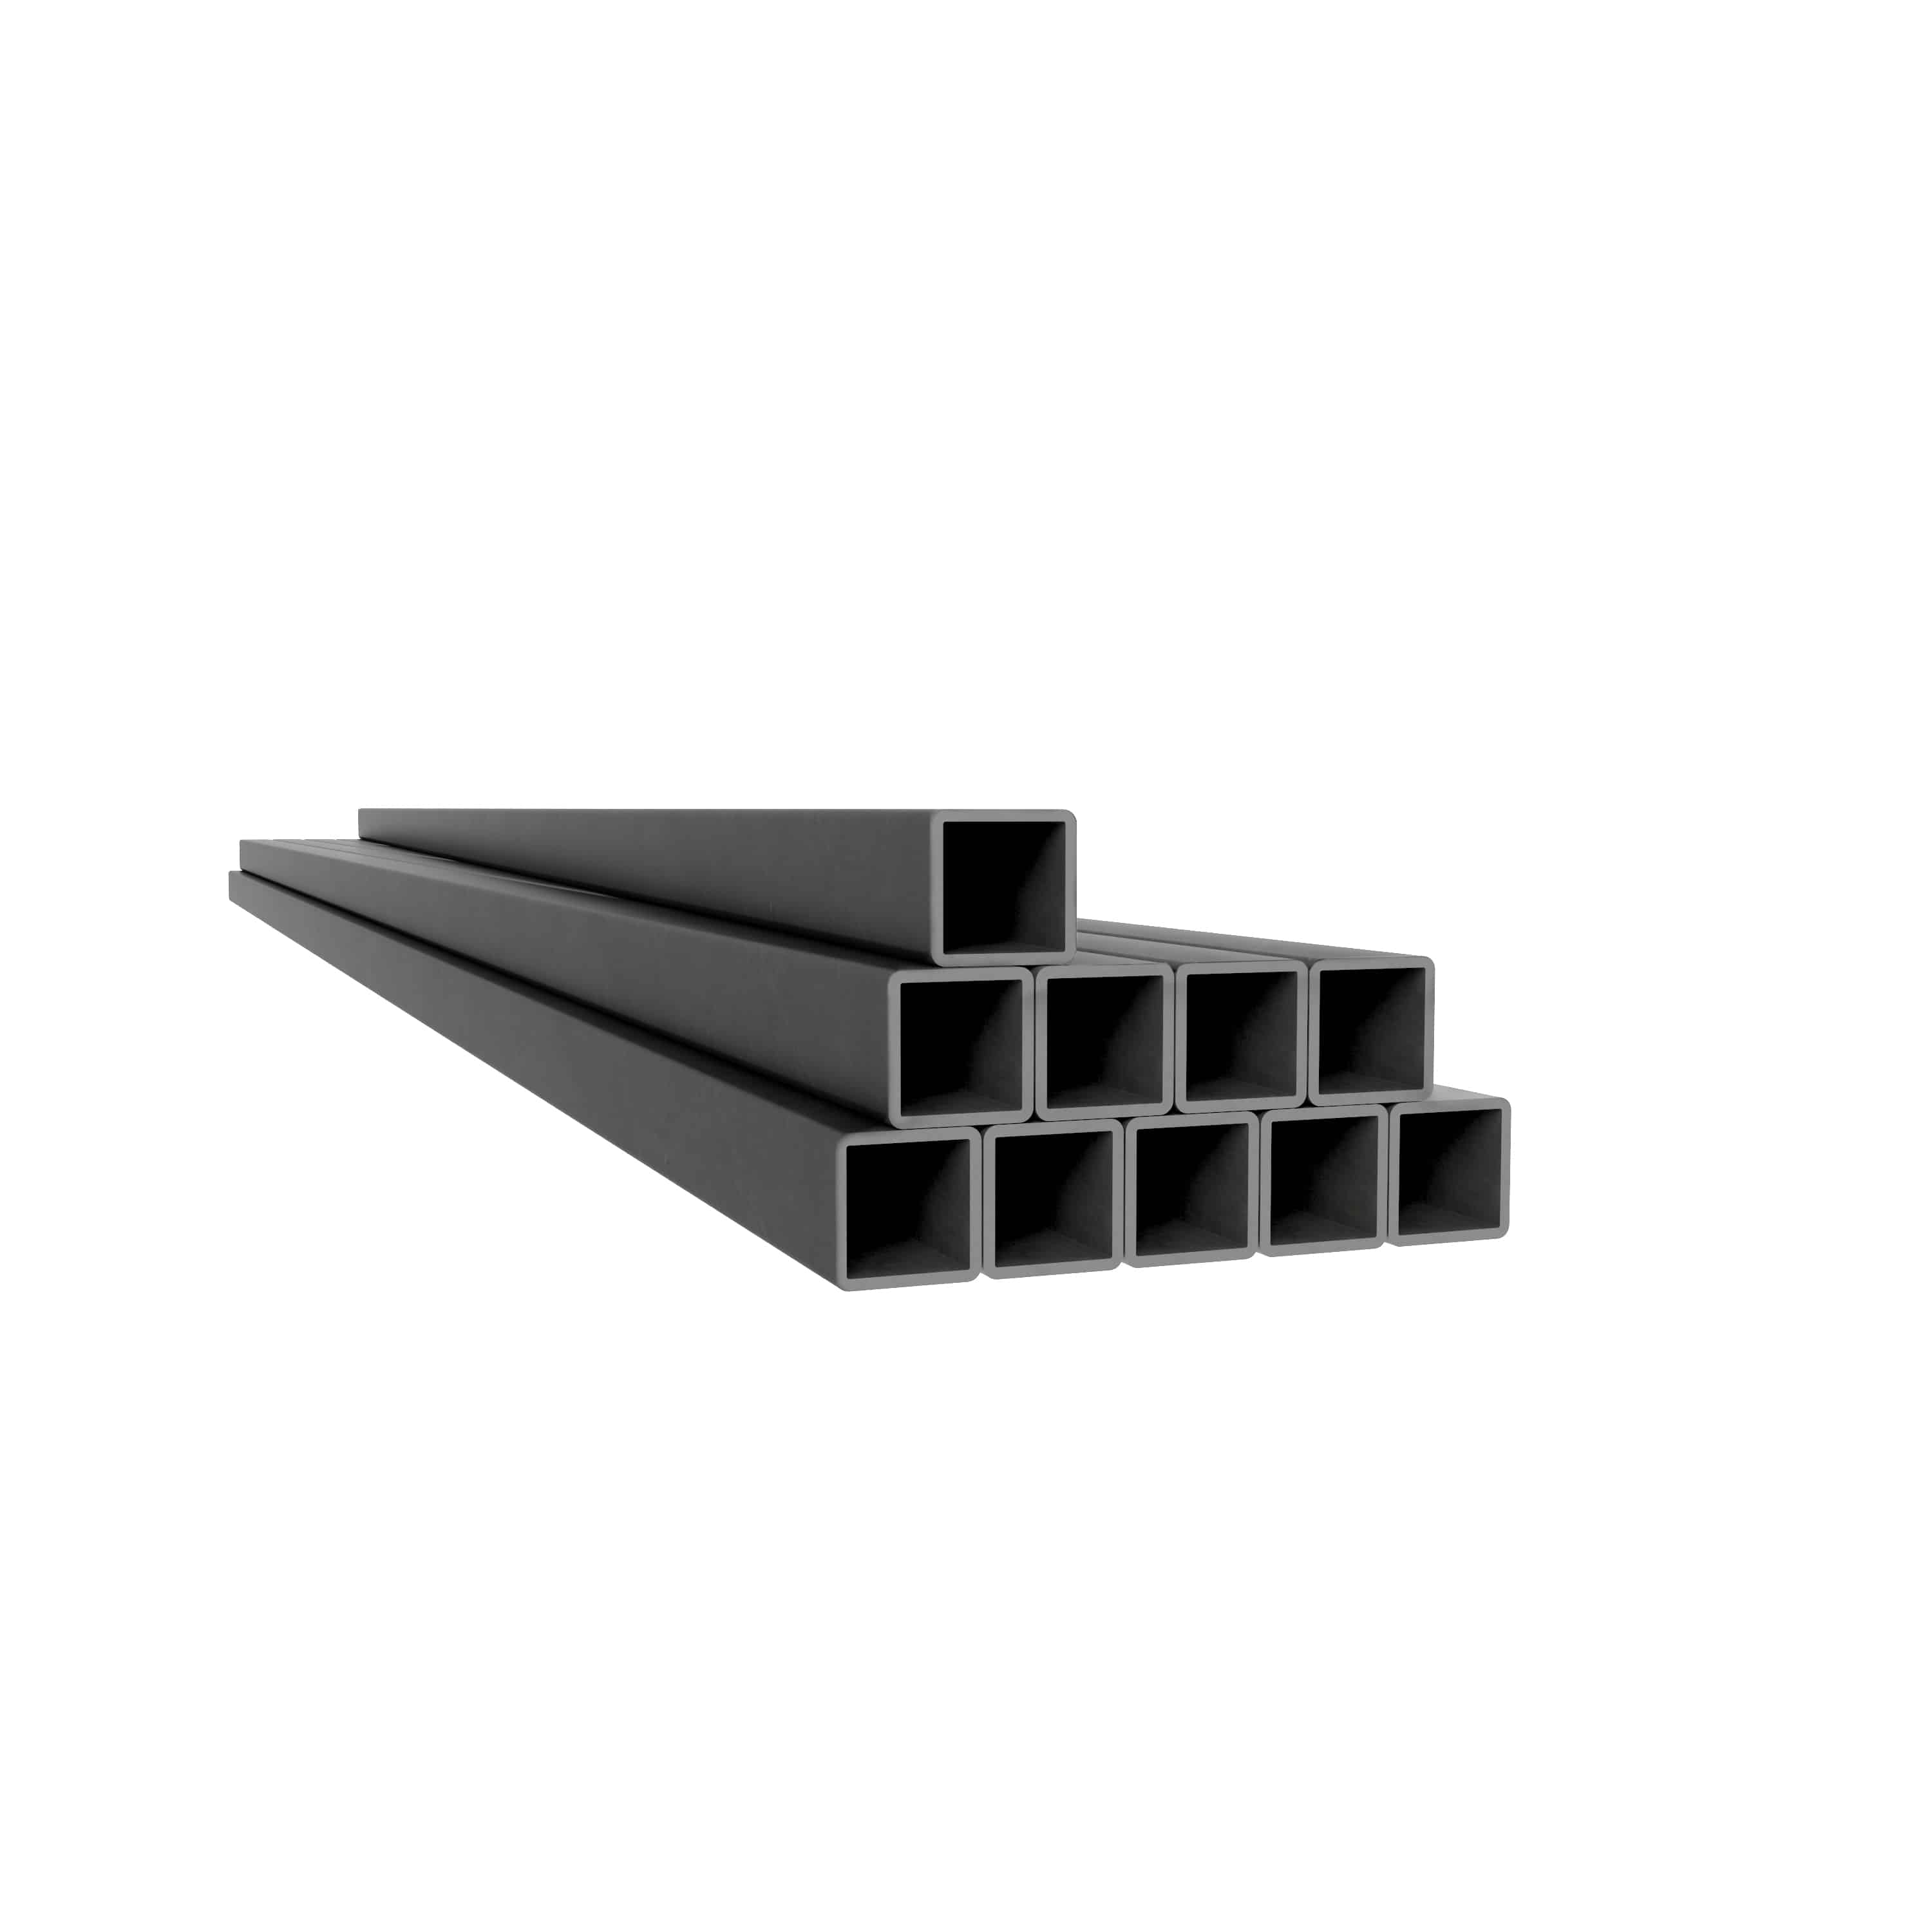 Square Pipe - Square pipe 150 x 150 x 6 mm S235-6LM, https:maxbau.ro